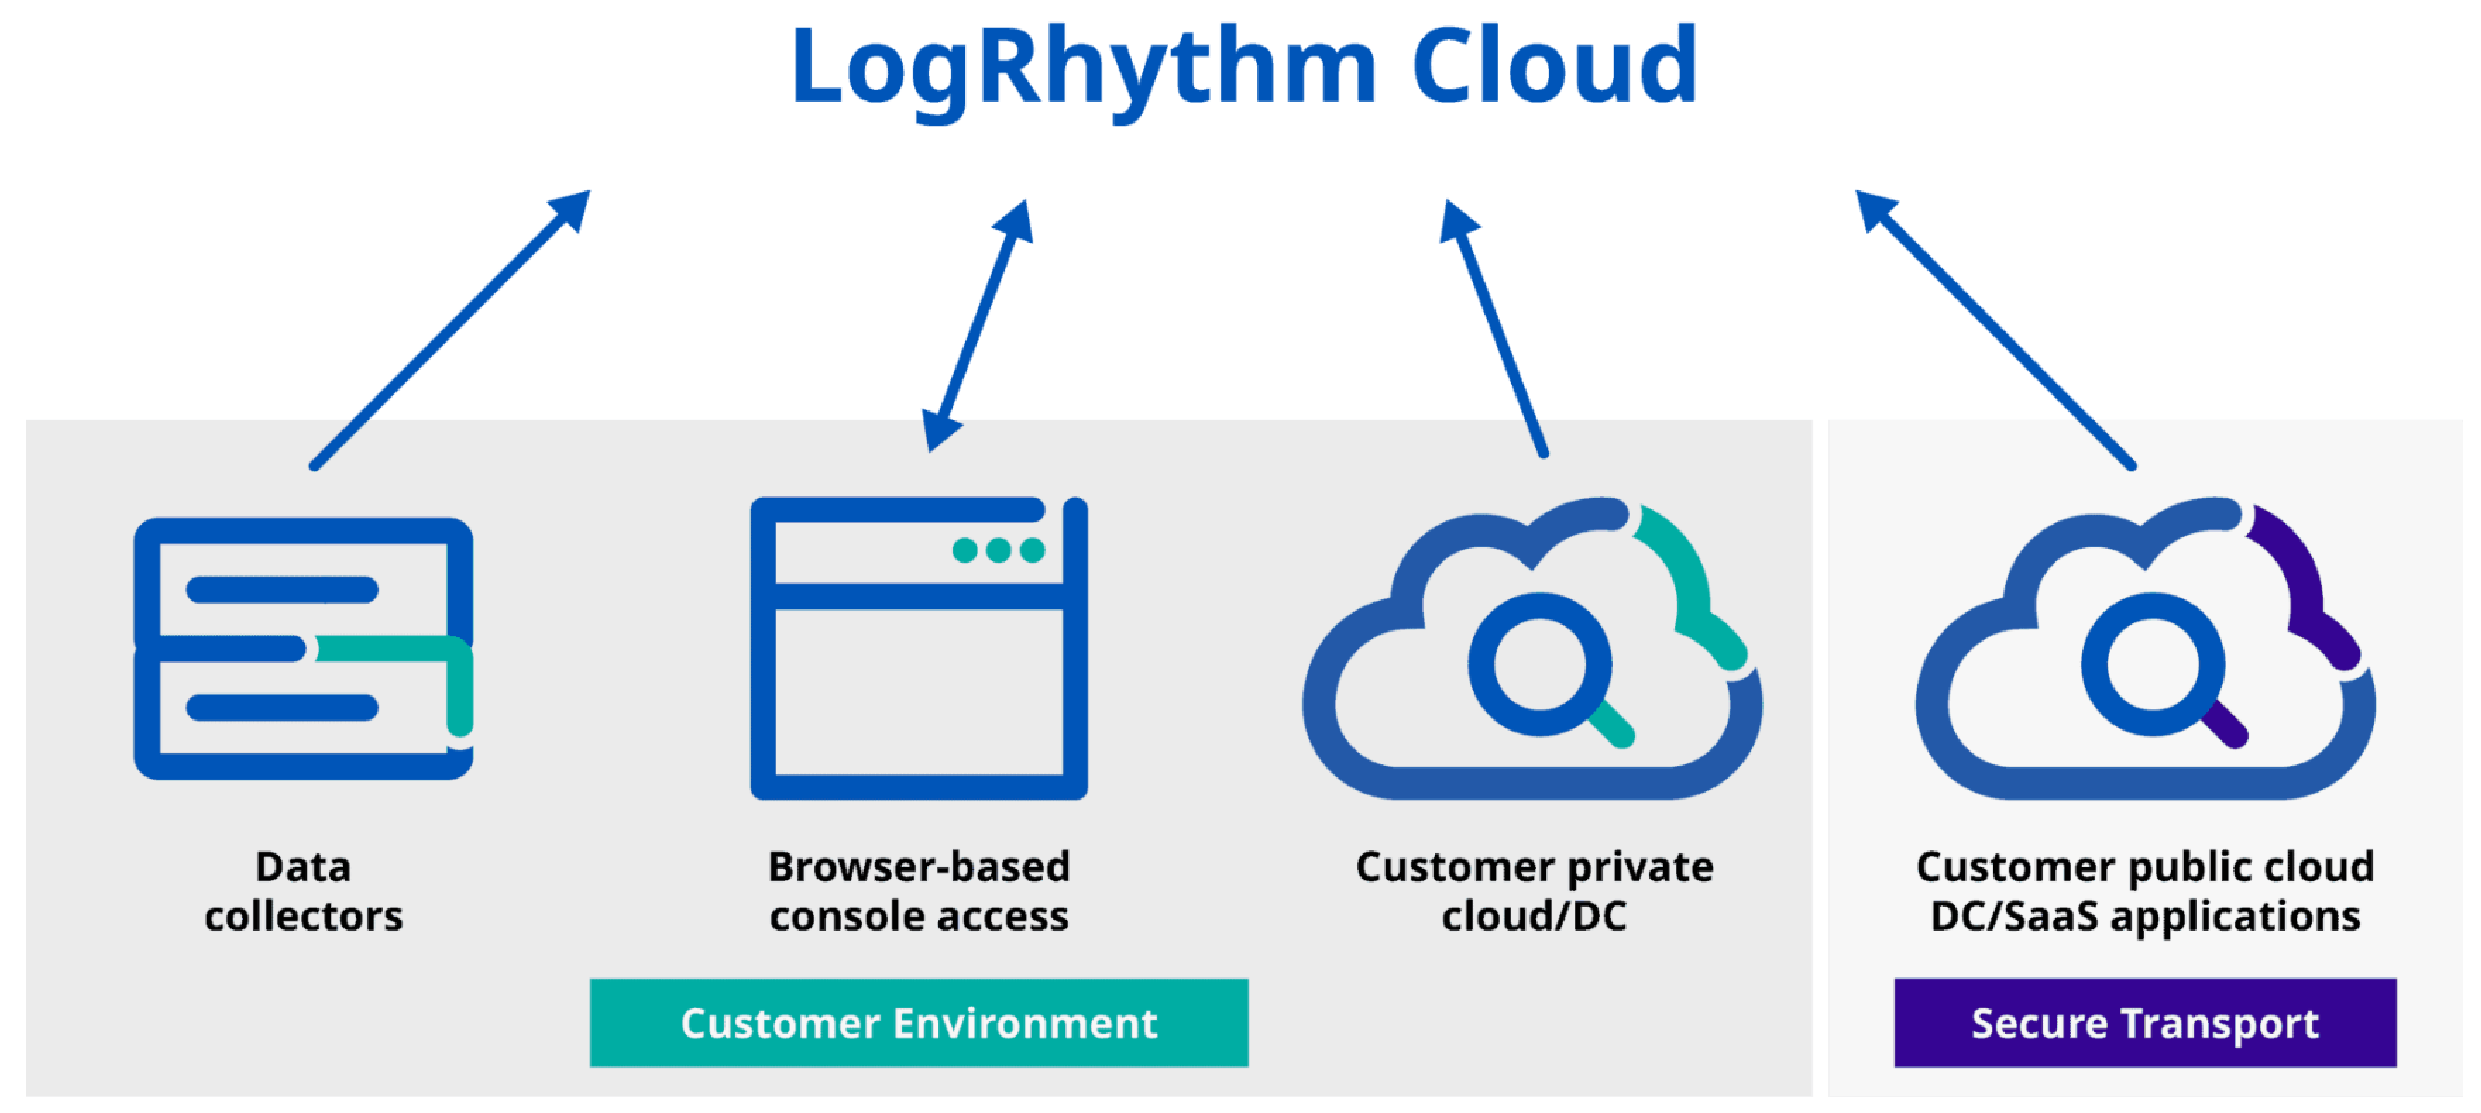 LogRhythm Cloud 保護您的數據，維護網路安全